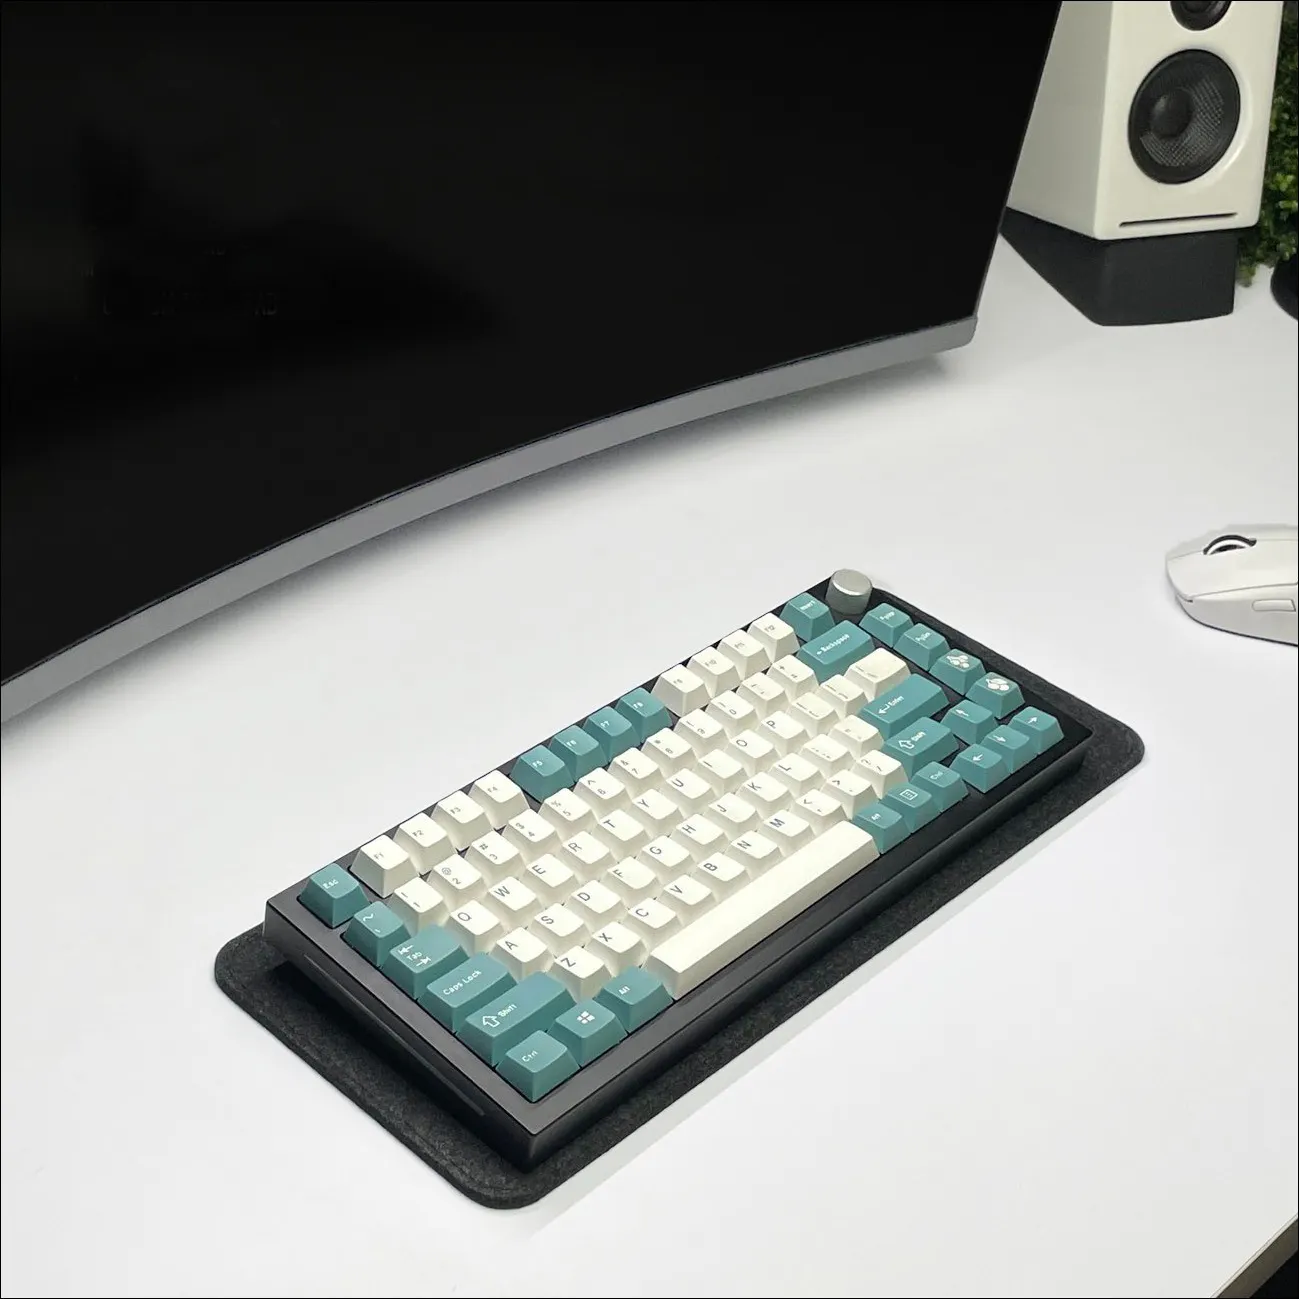 OGO-miniteclado para teclado de ratón pequeño, tela suave de fieltro de lana, color gris oscuro, 2023